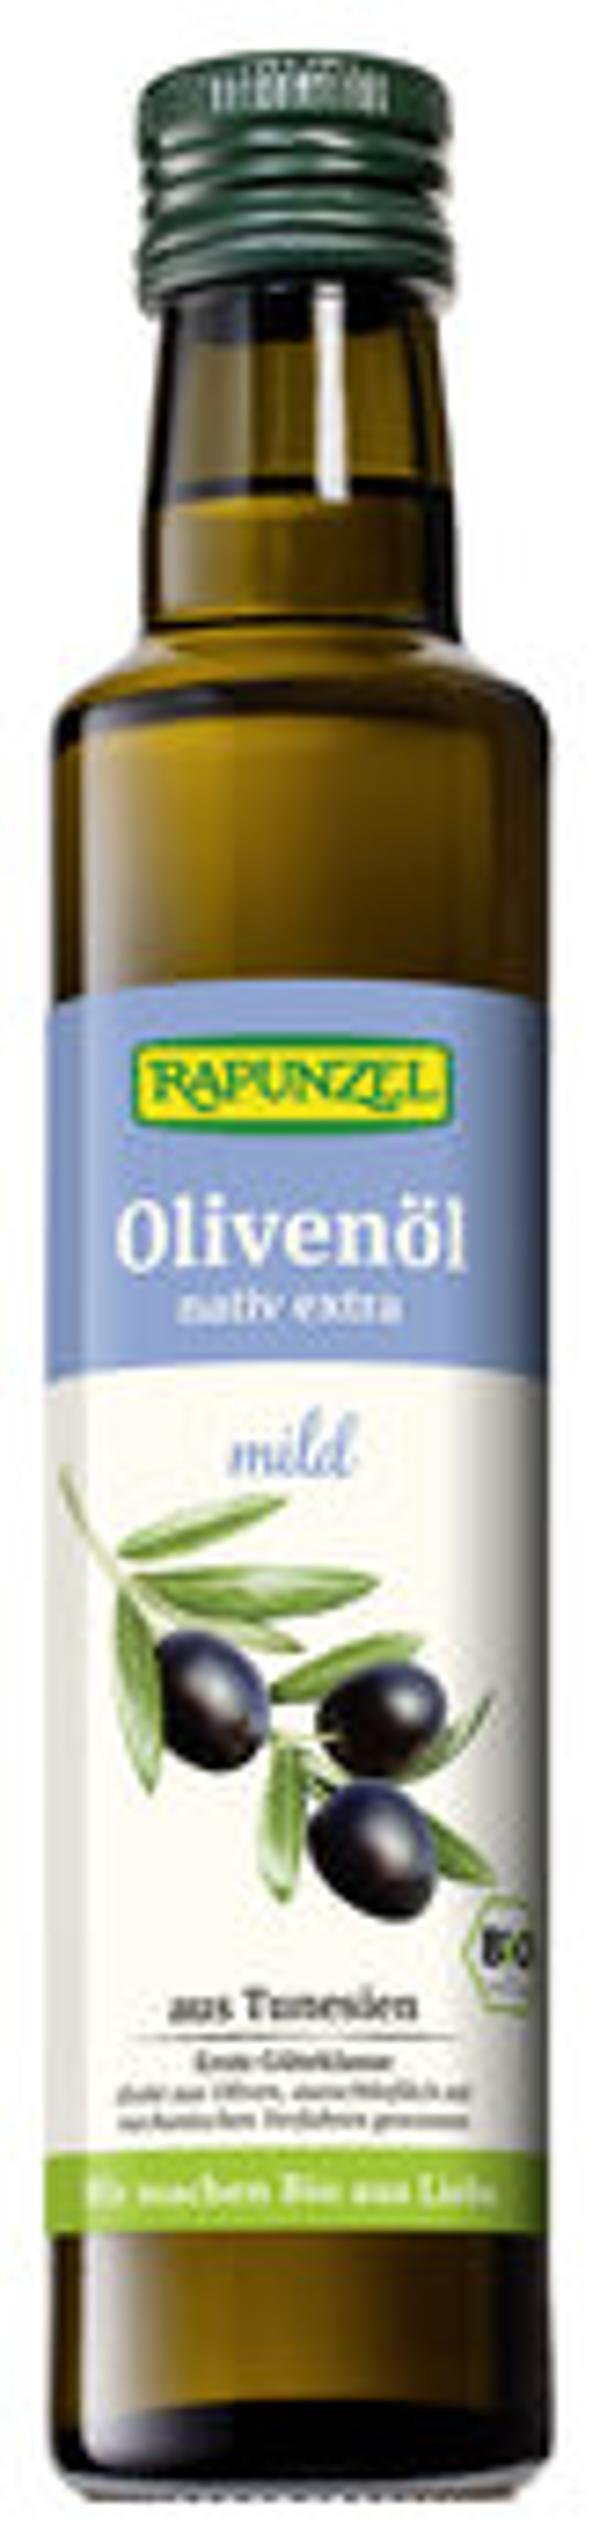 Produktfoto zu Olivenöl mild, 250 ml